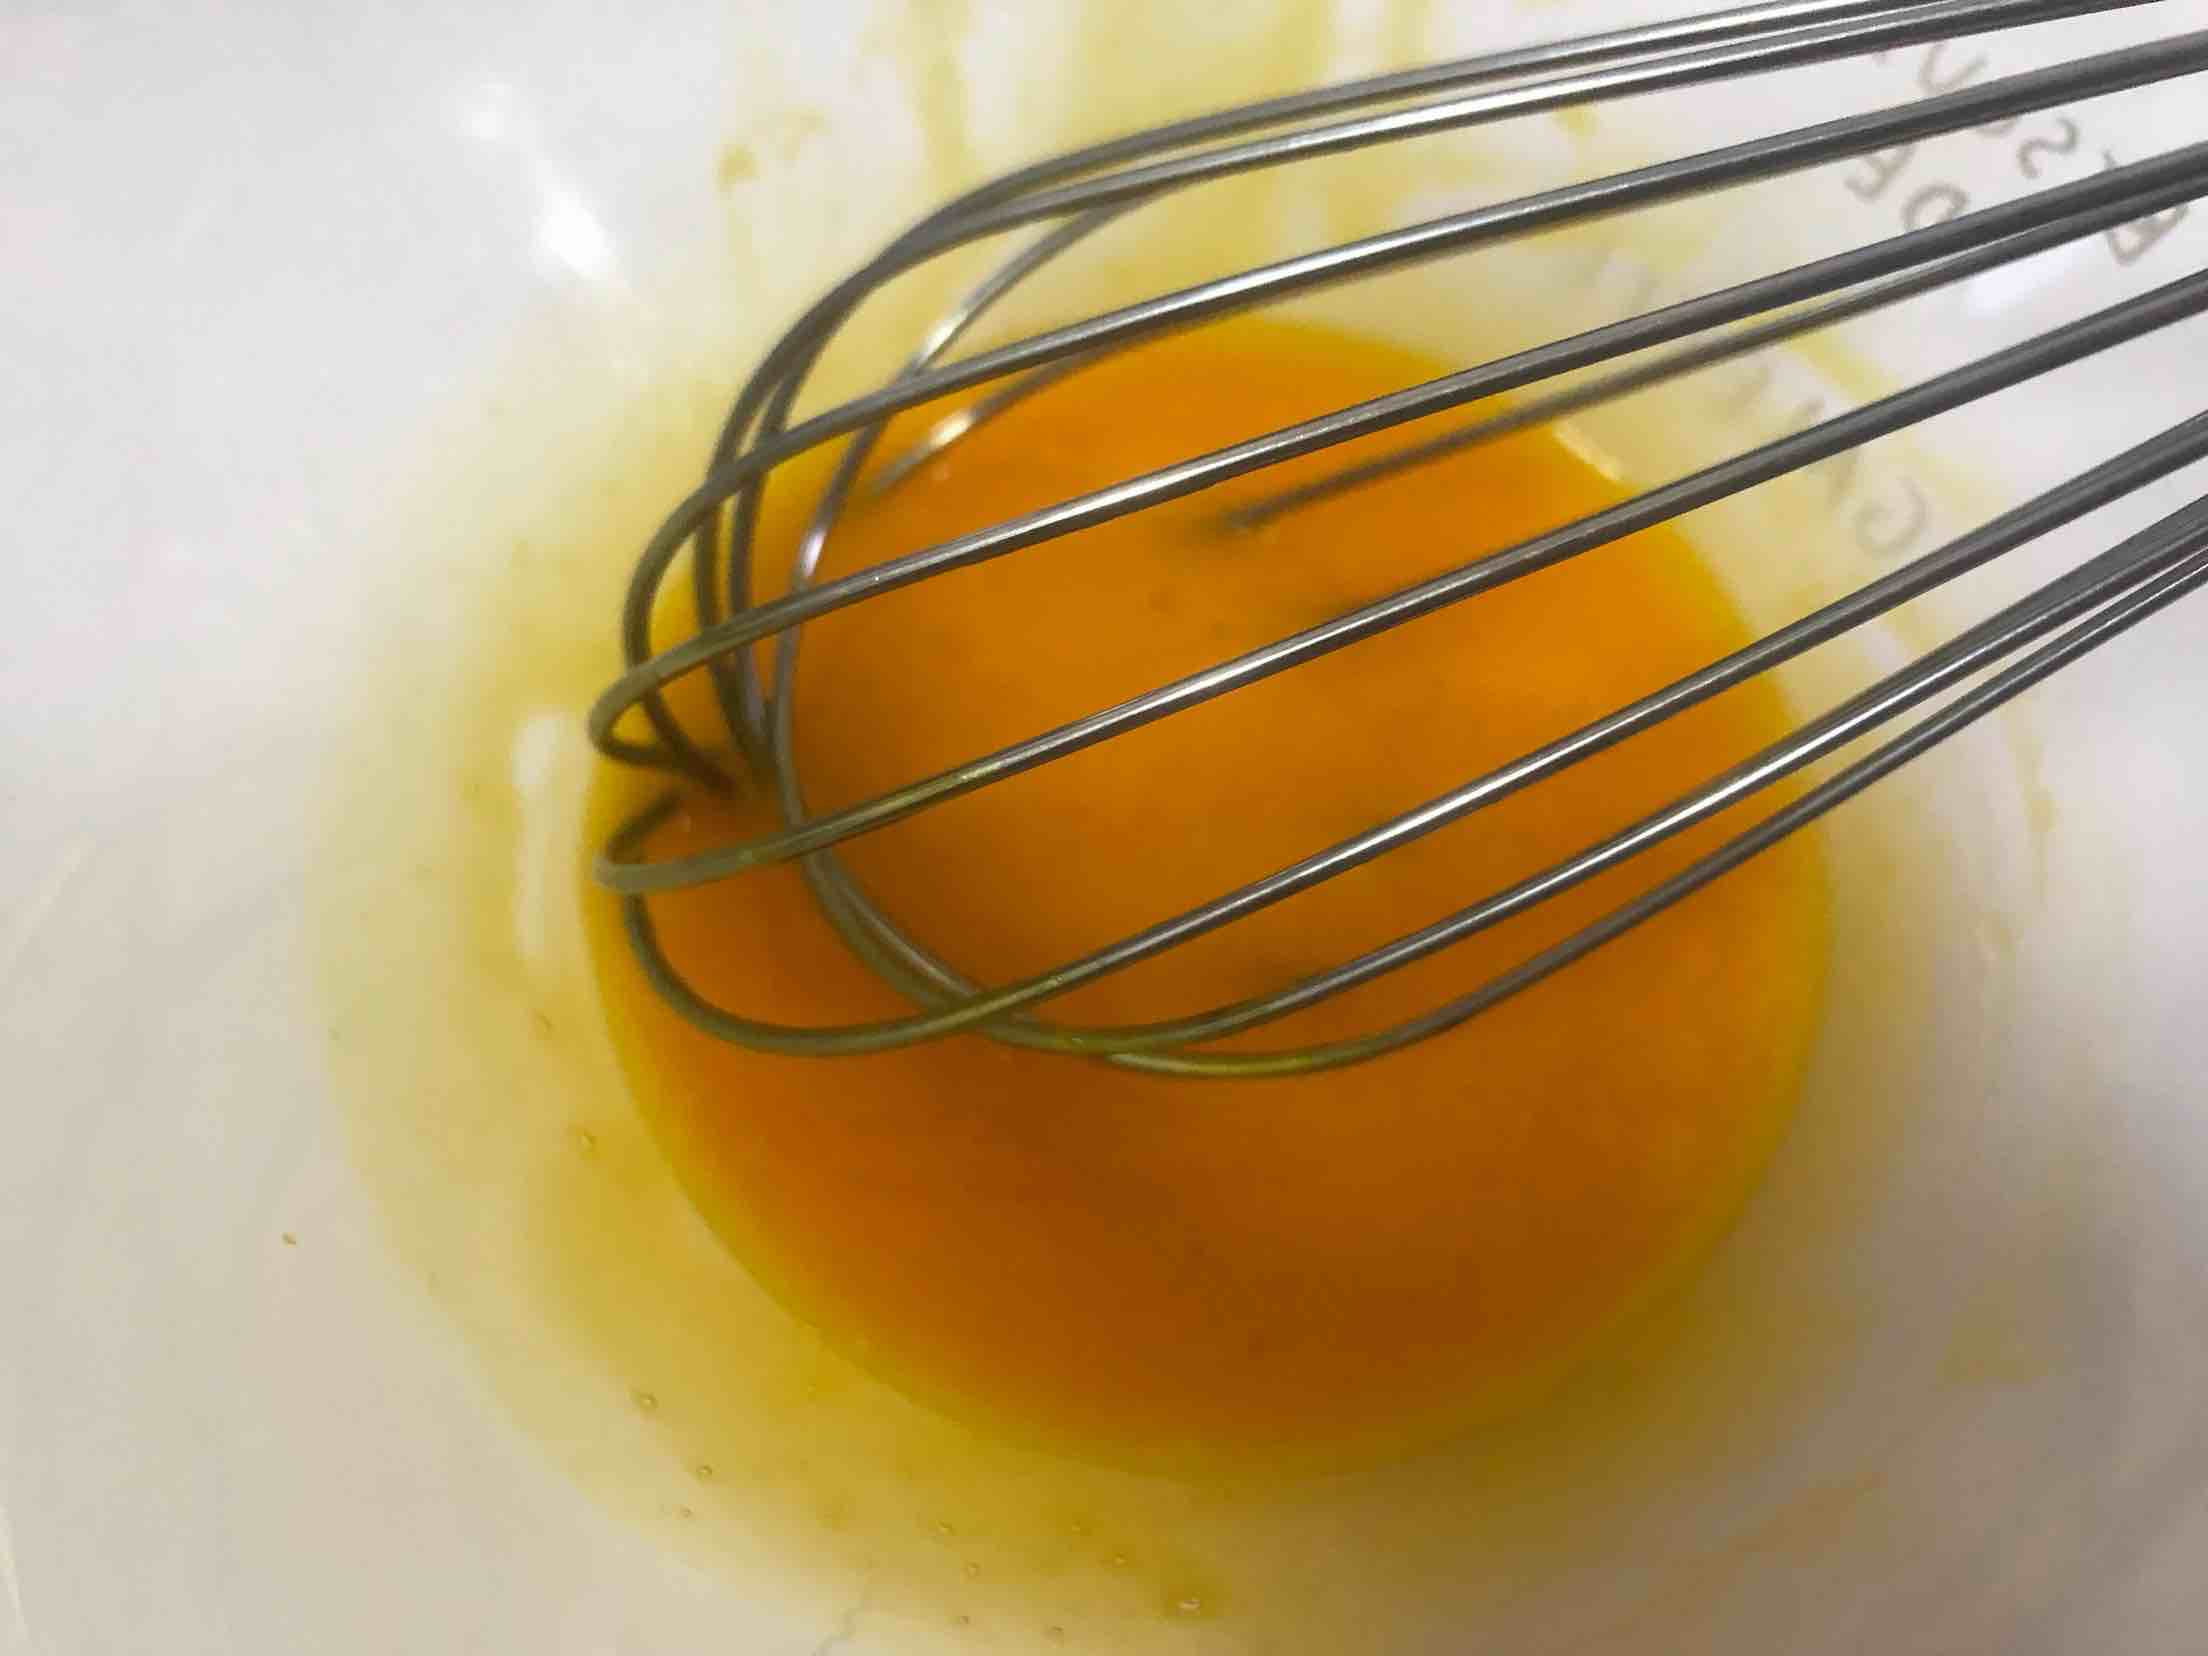 Original Egg Tart recipe